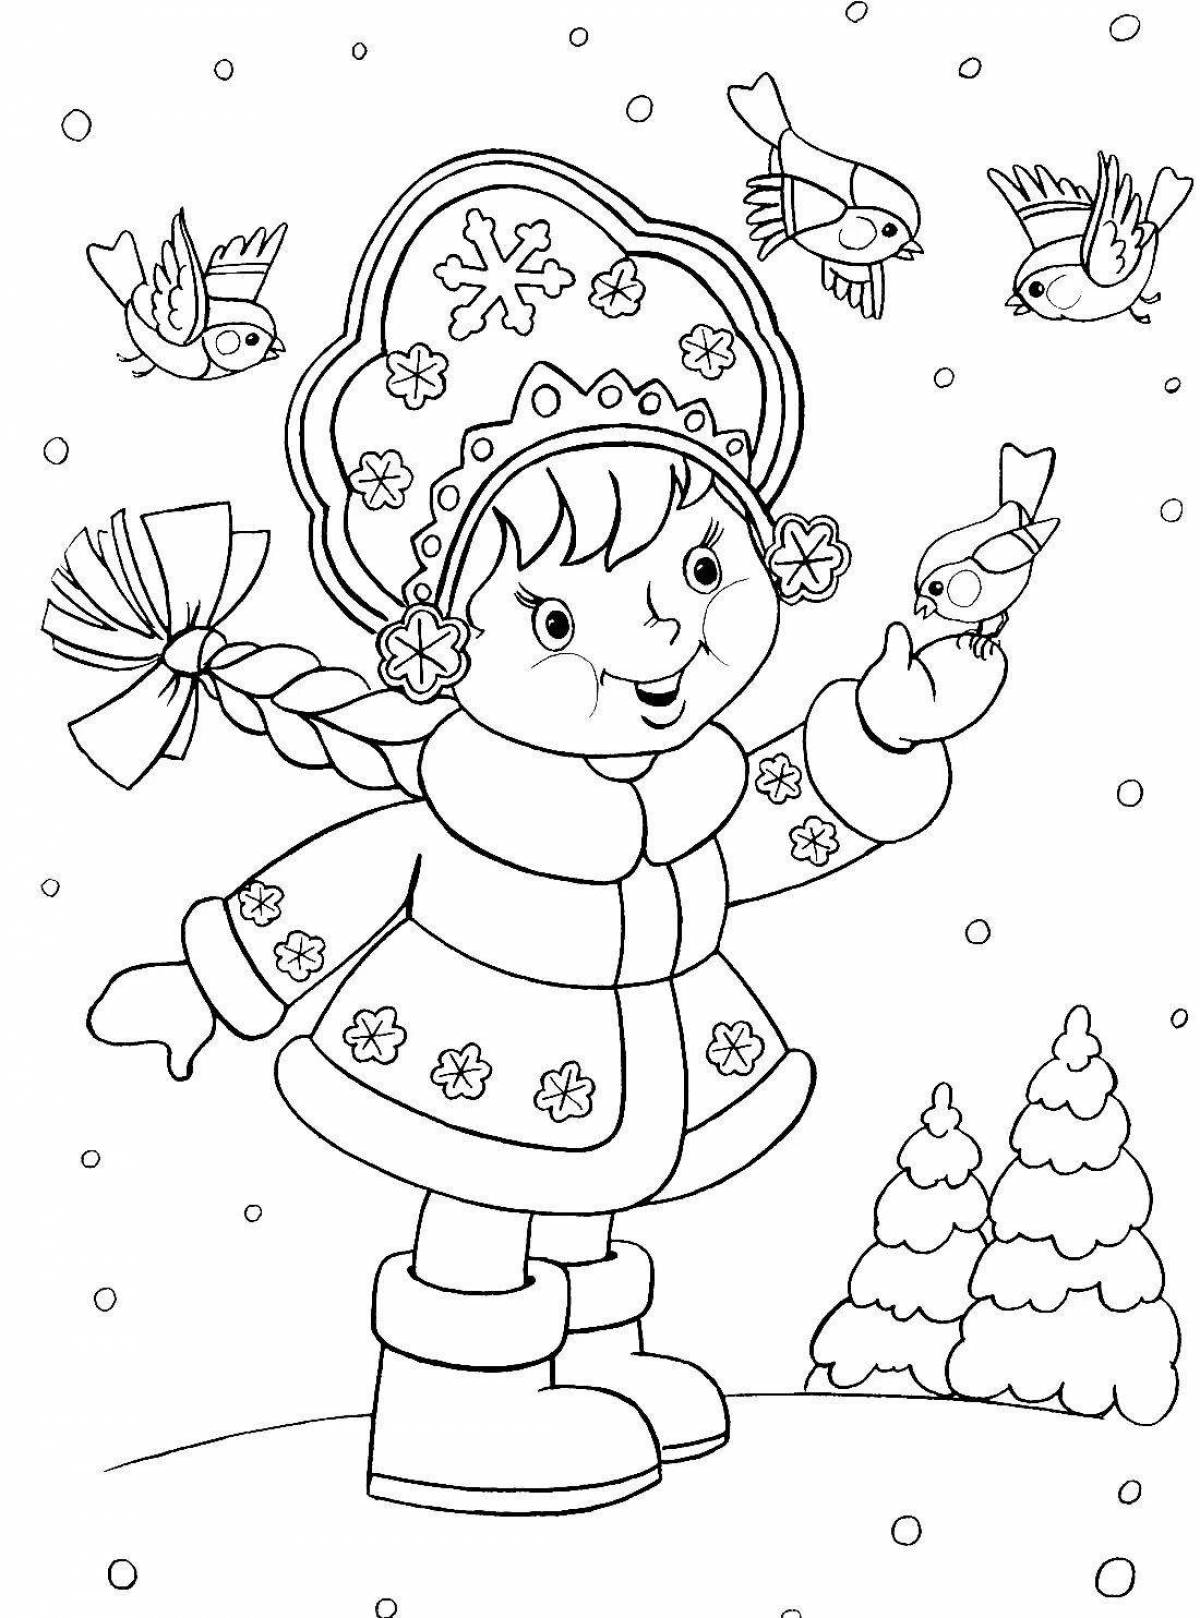 Adorable Christmas coloring book for preschoolers